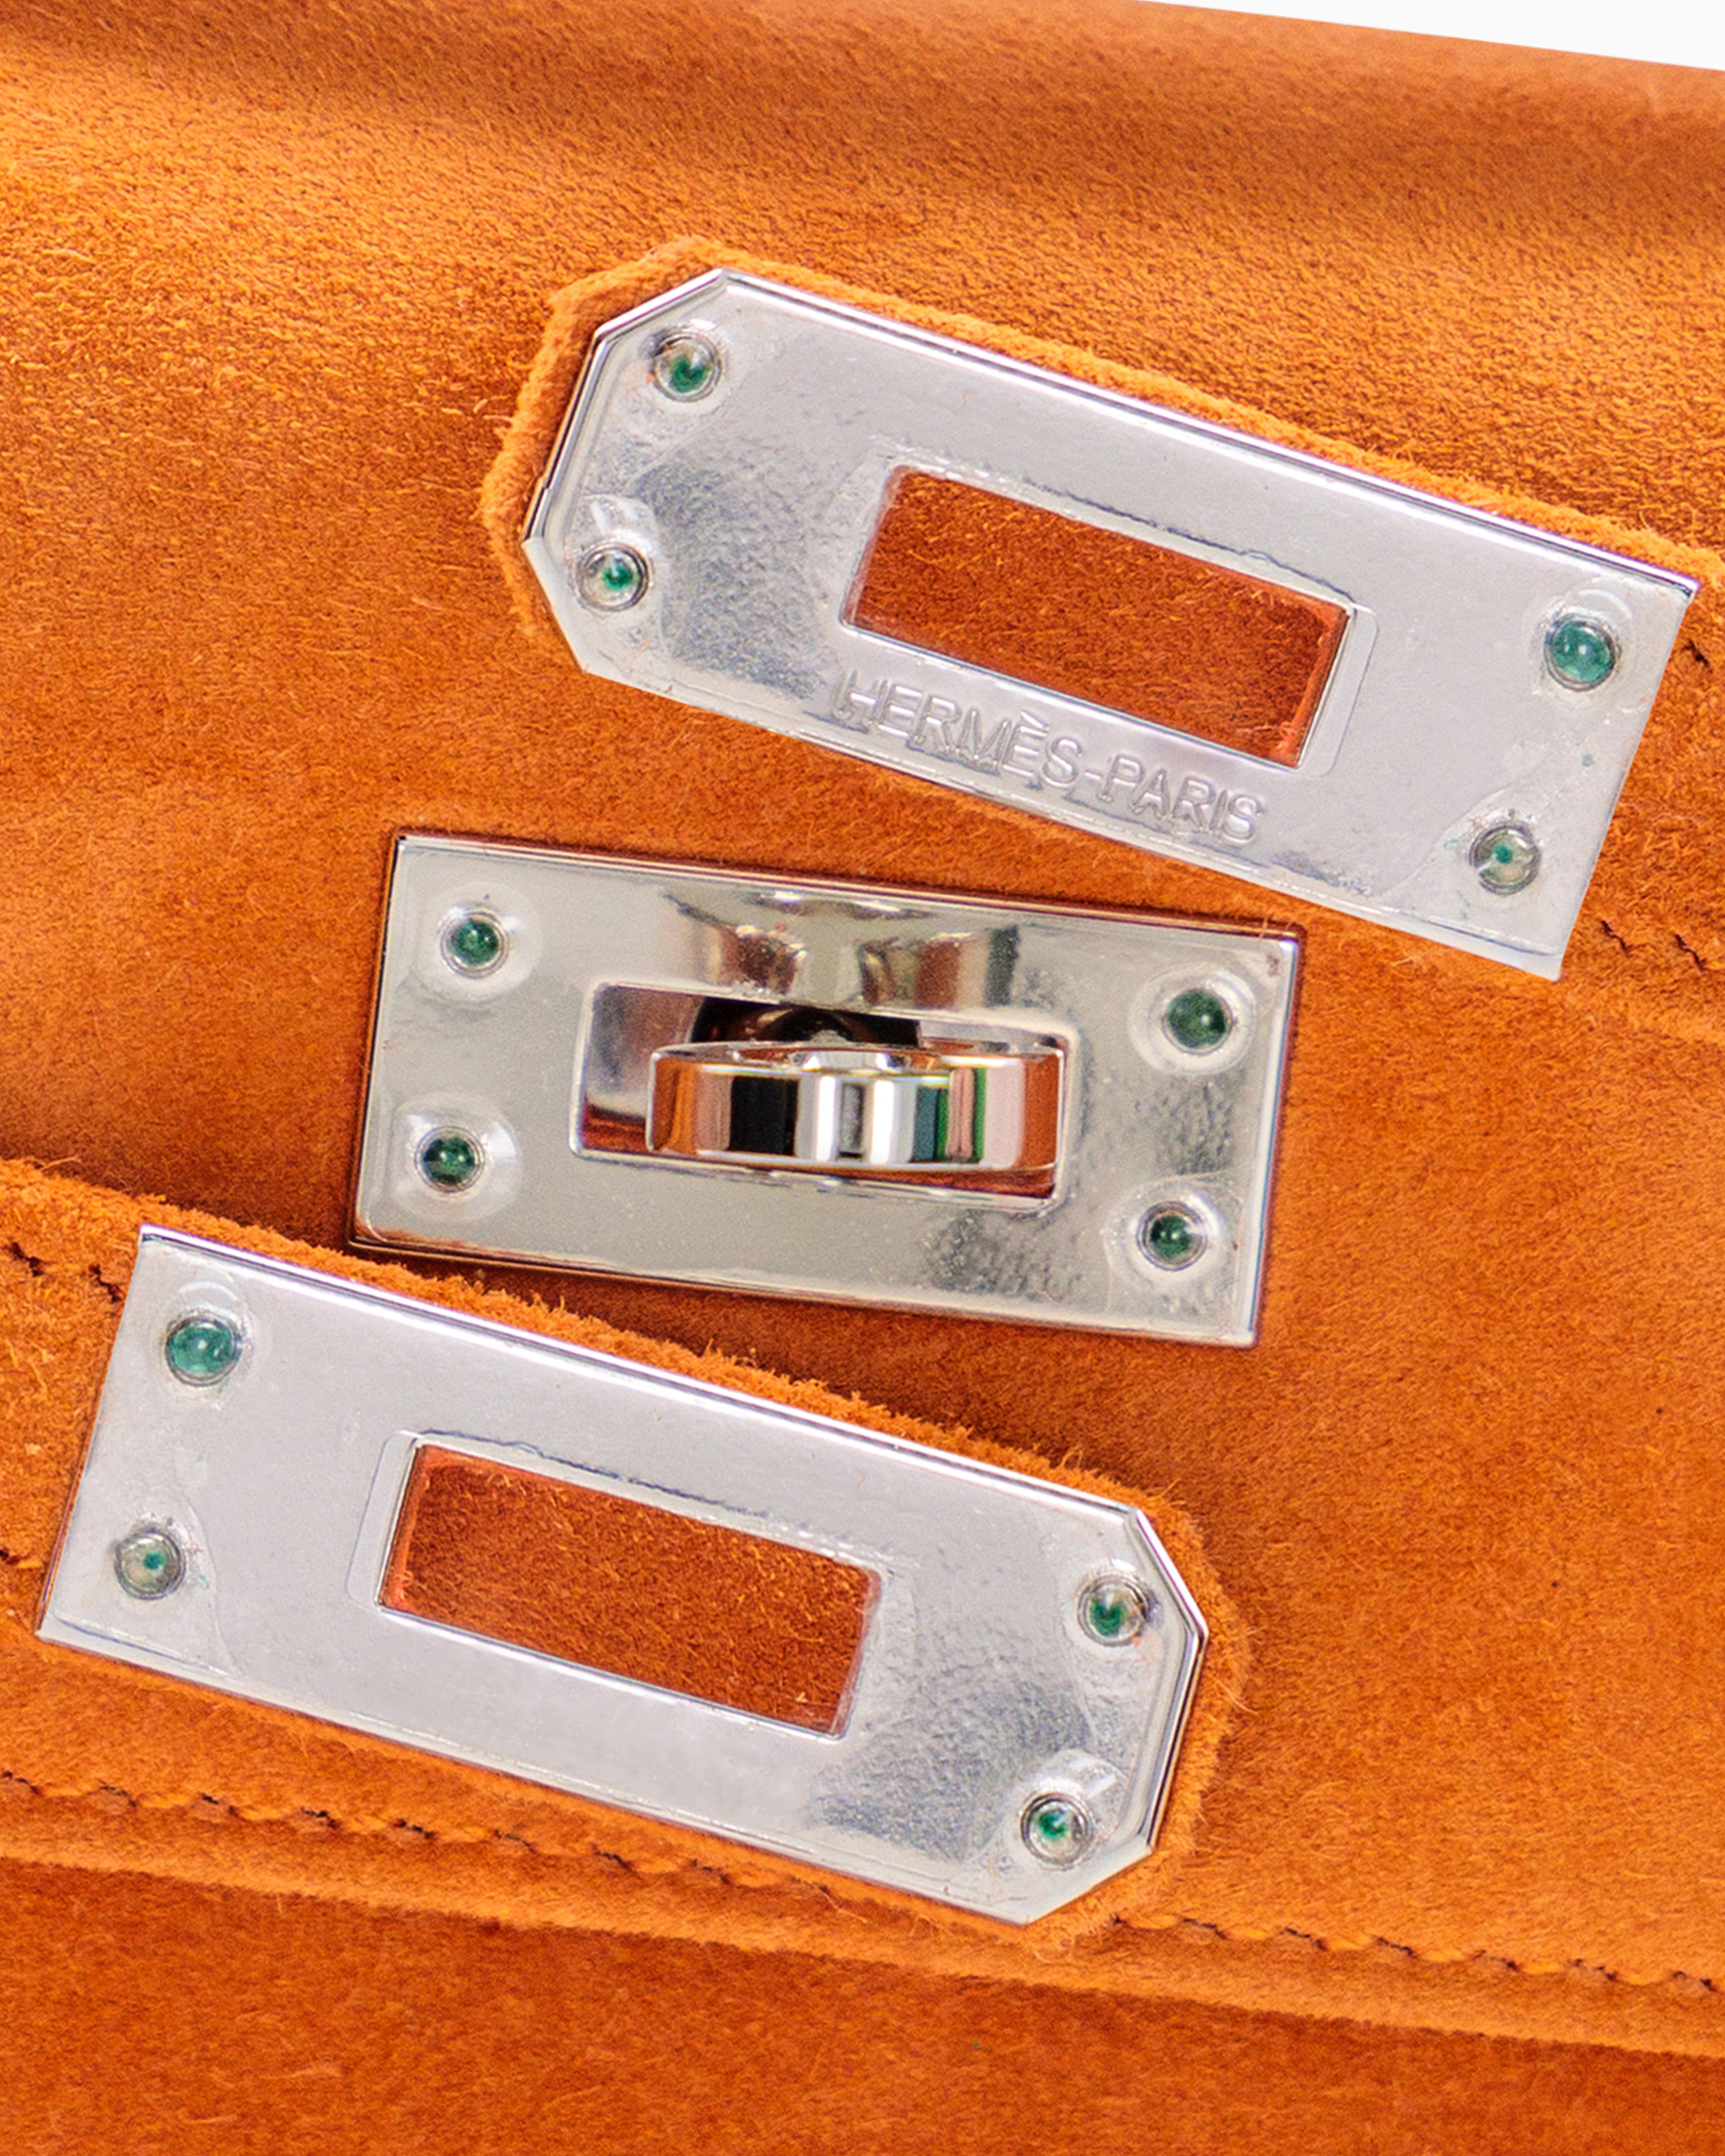 Pre-owned Kelly Pochette Doblis Orange Vintage Bag Palladium Hardware